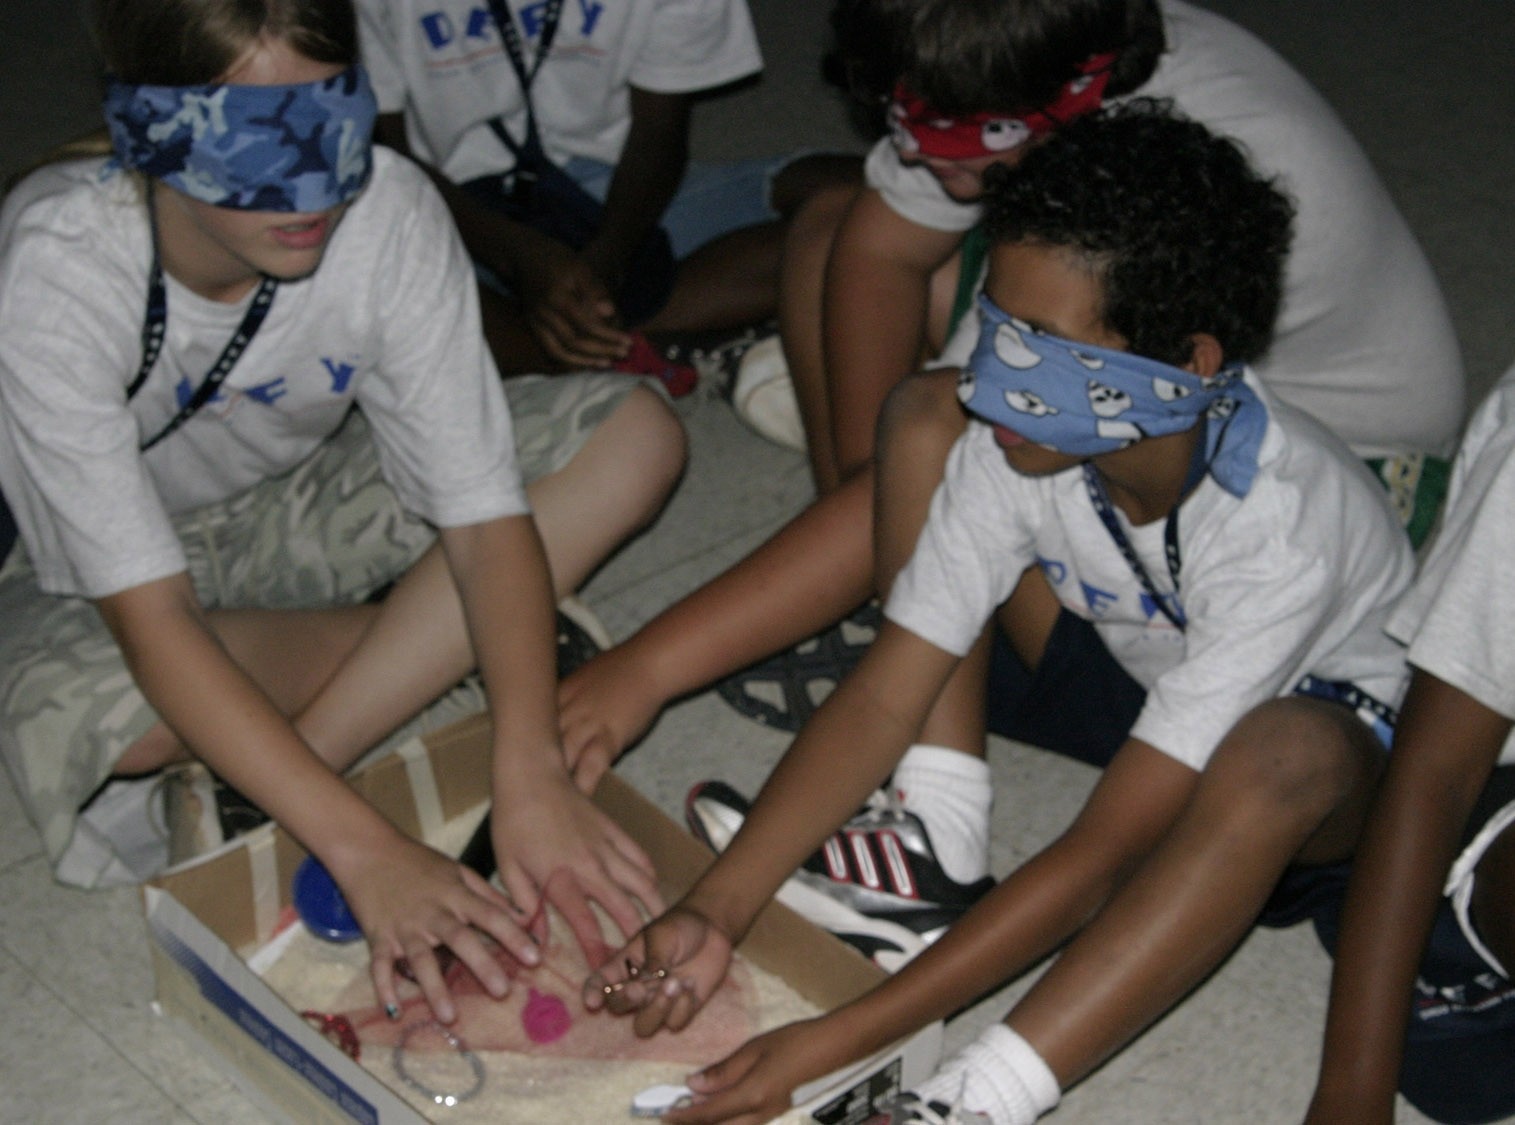 Kids learn teamwork, drug education at DEFY camp Article